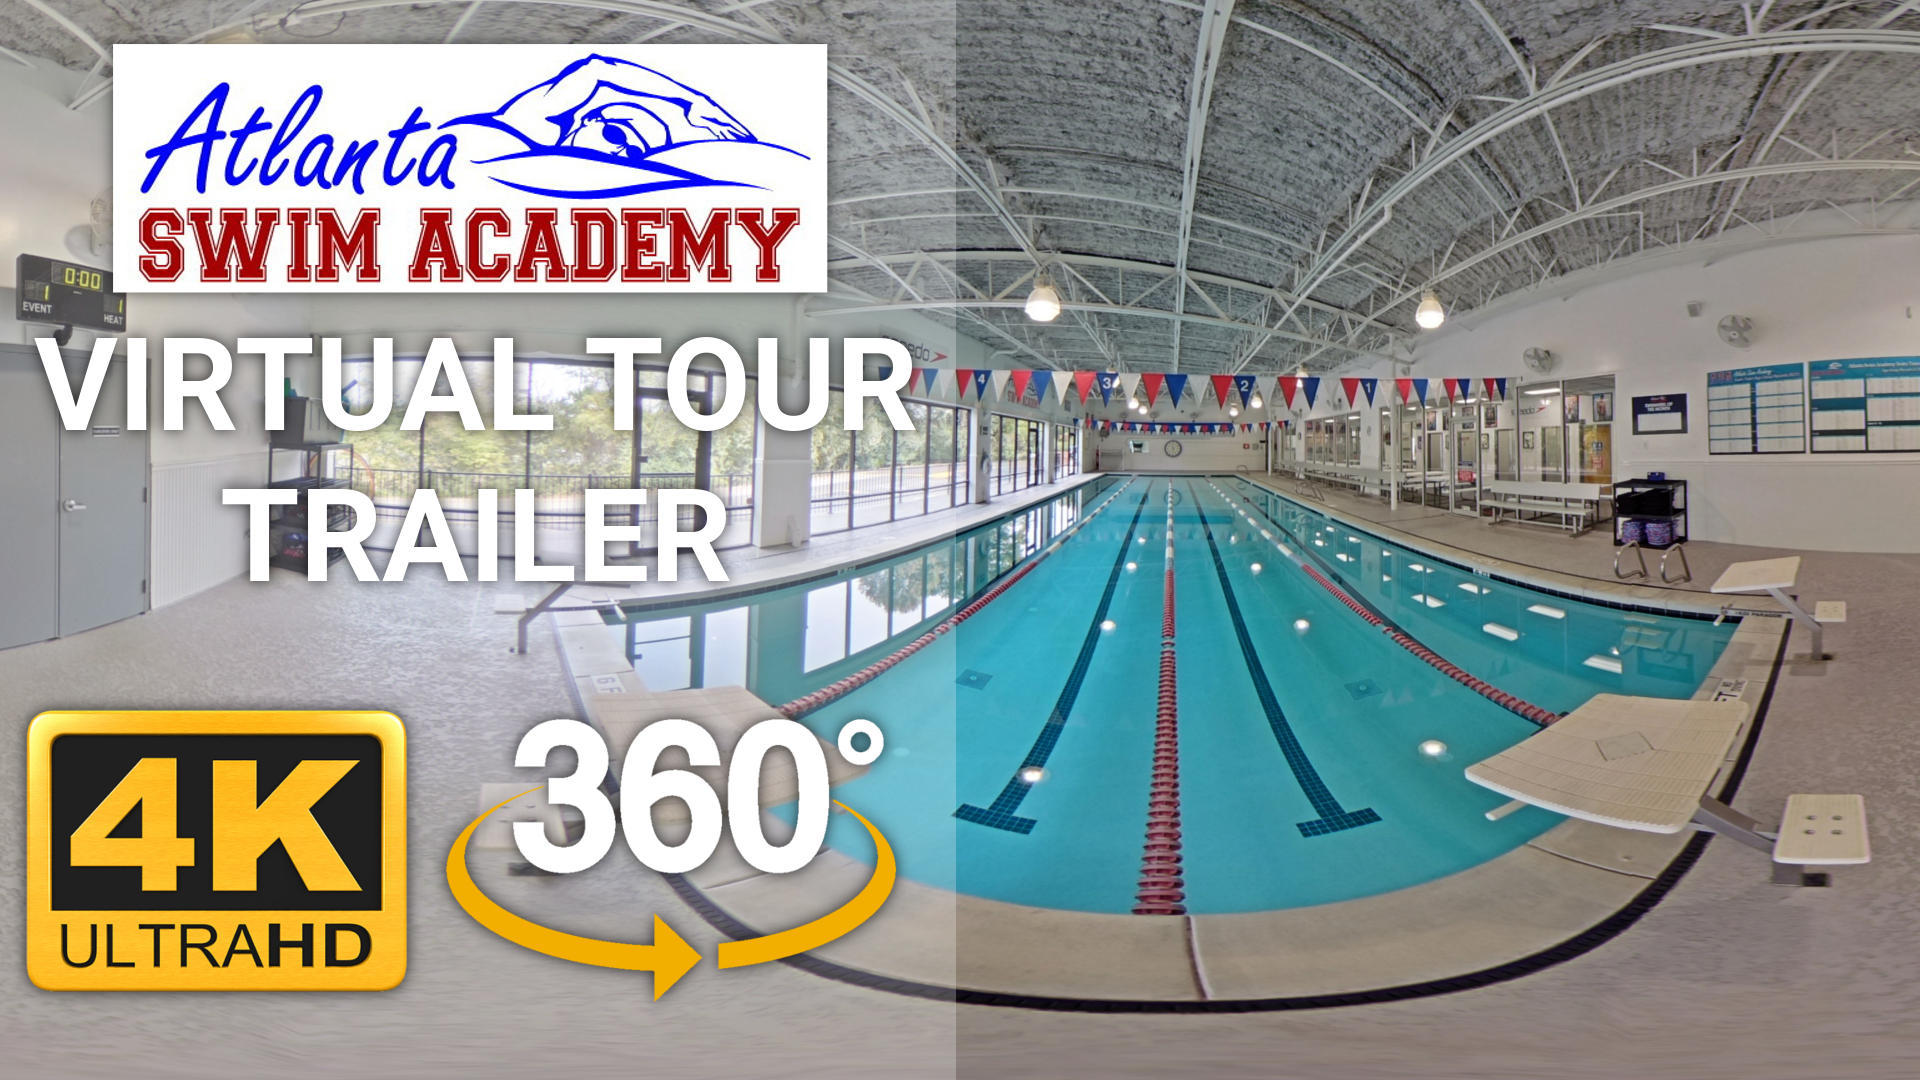 Atlanta Swim Academy - Virtual Tour Trailer